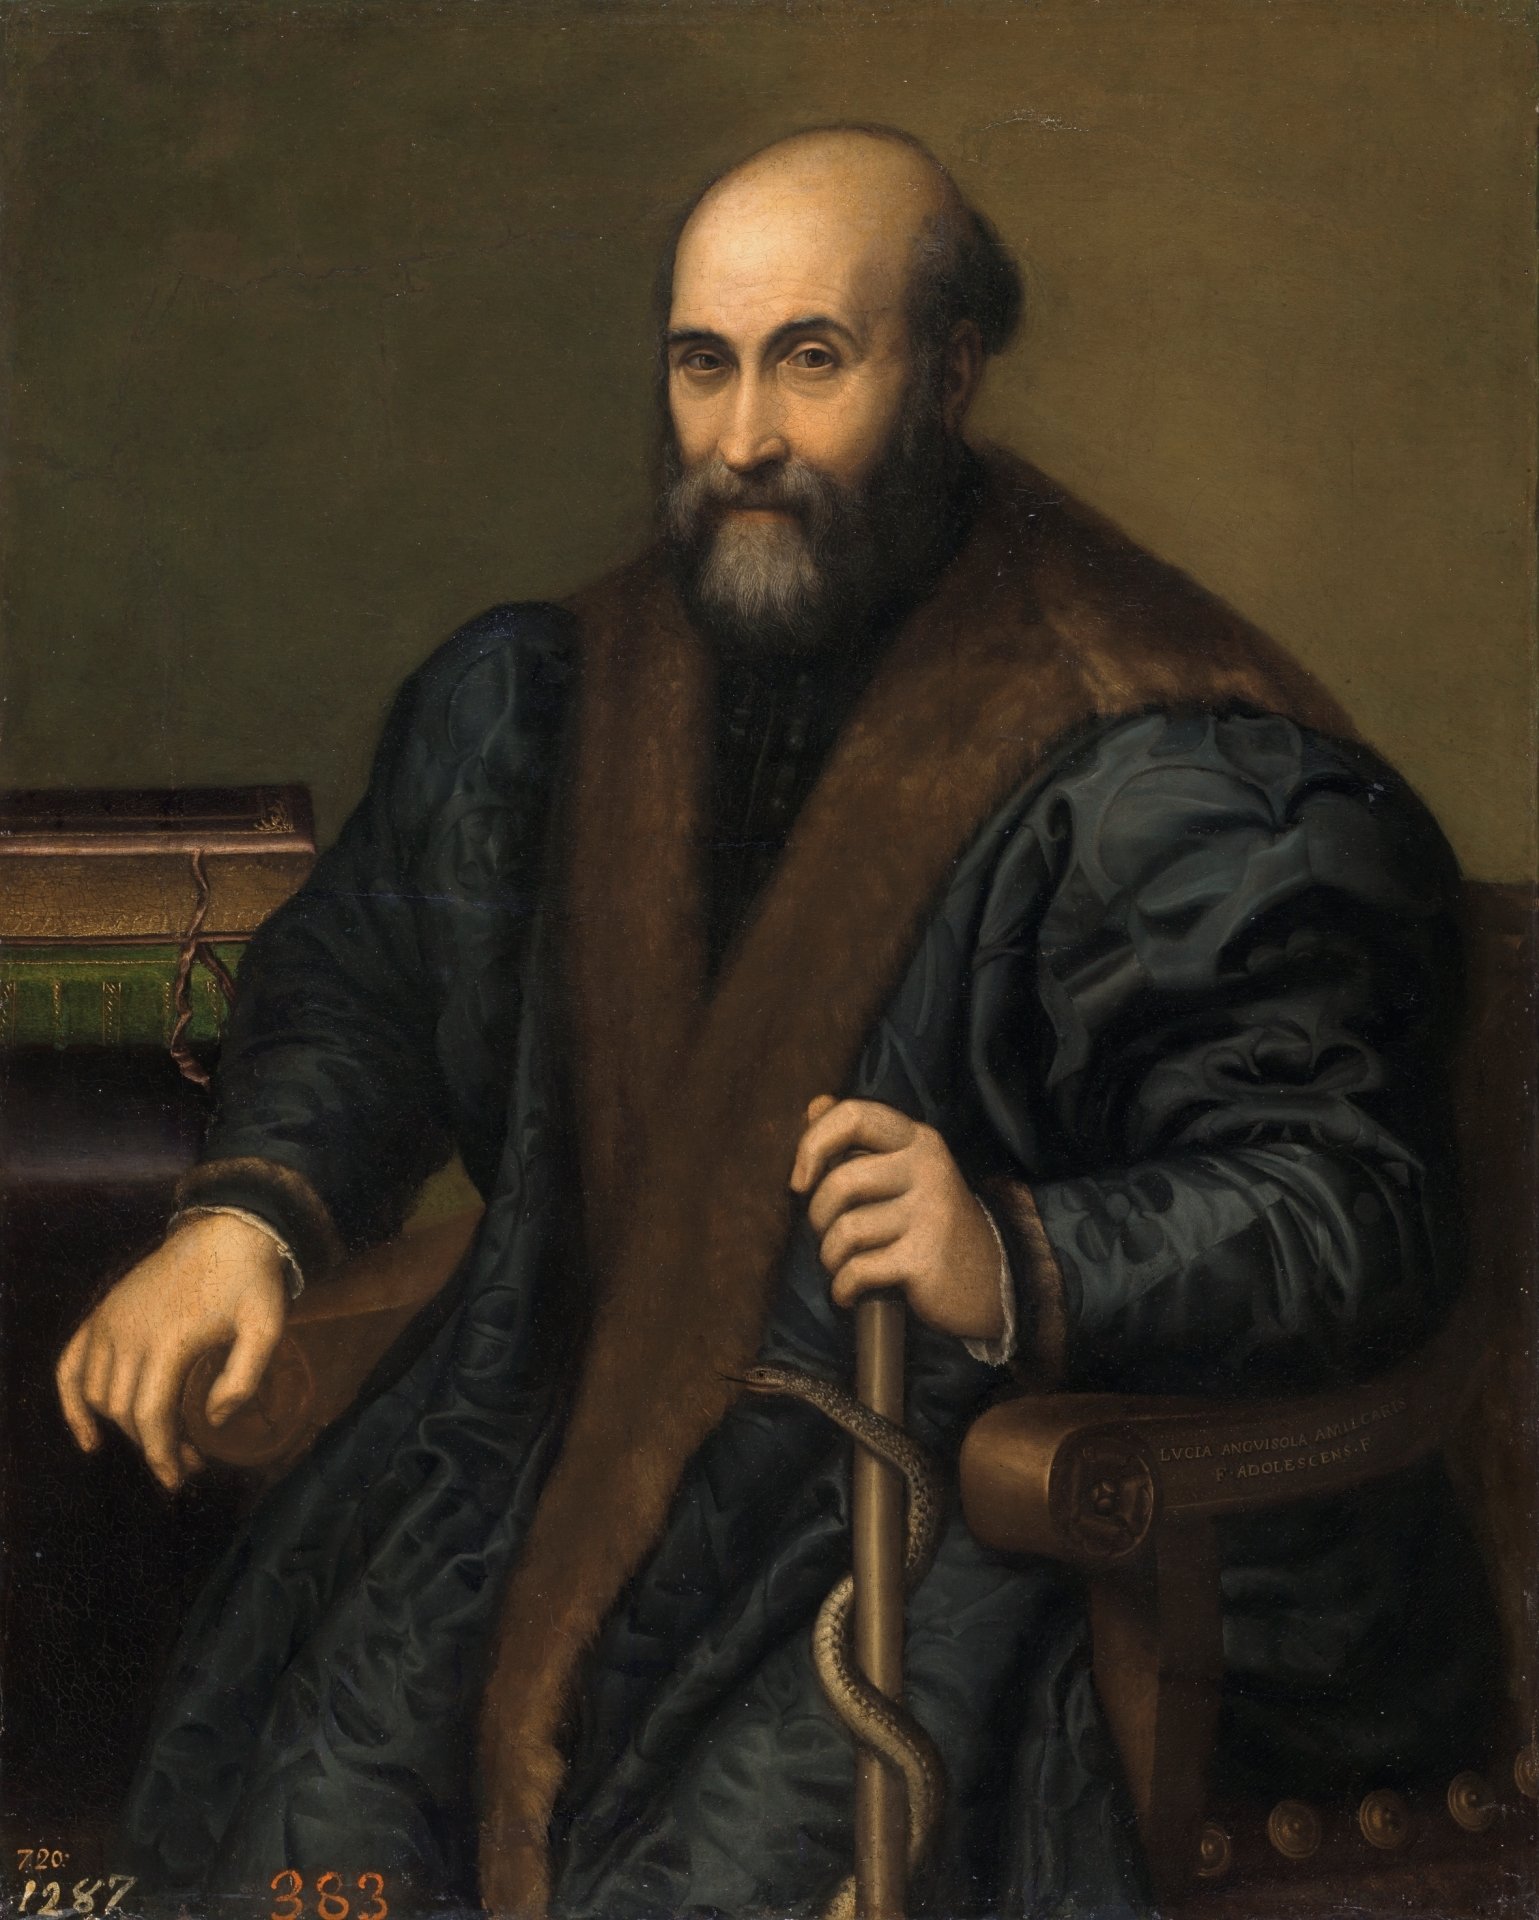 LUCIA ANGUISSOLA (1536-1565), PORTRAIT OF PIETRO MANNA, 1557, MUSEO DEL PRADO, MADRID, SPAIN